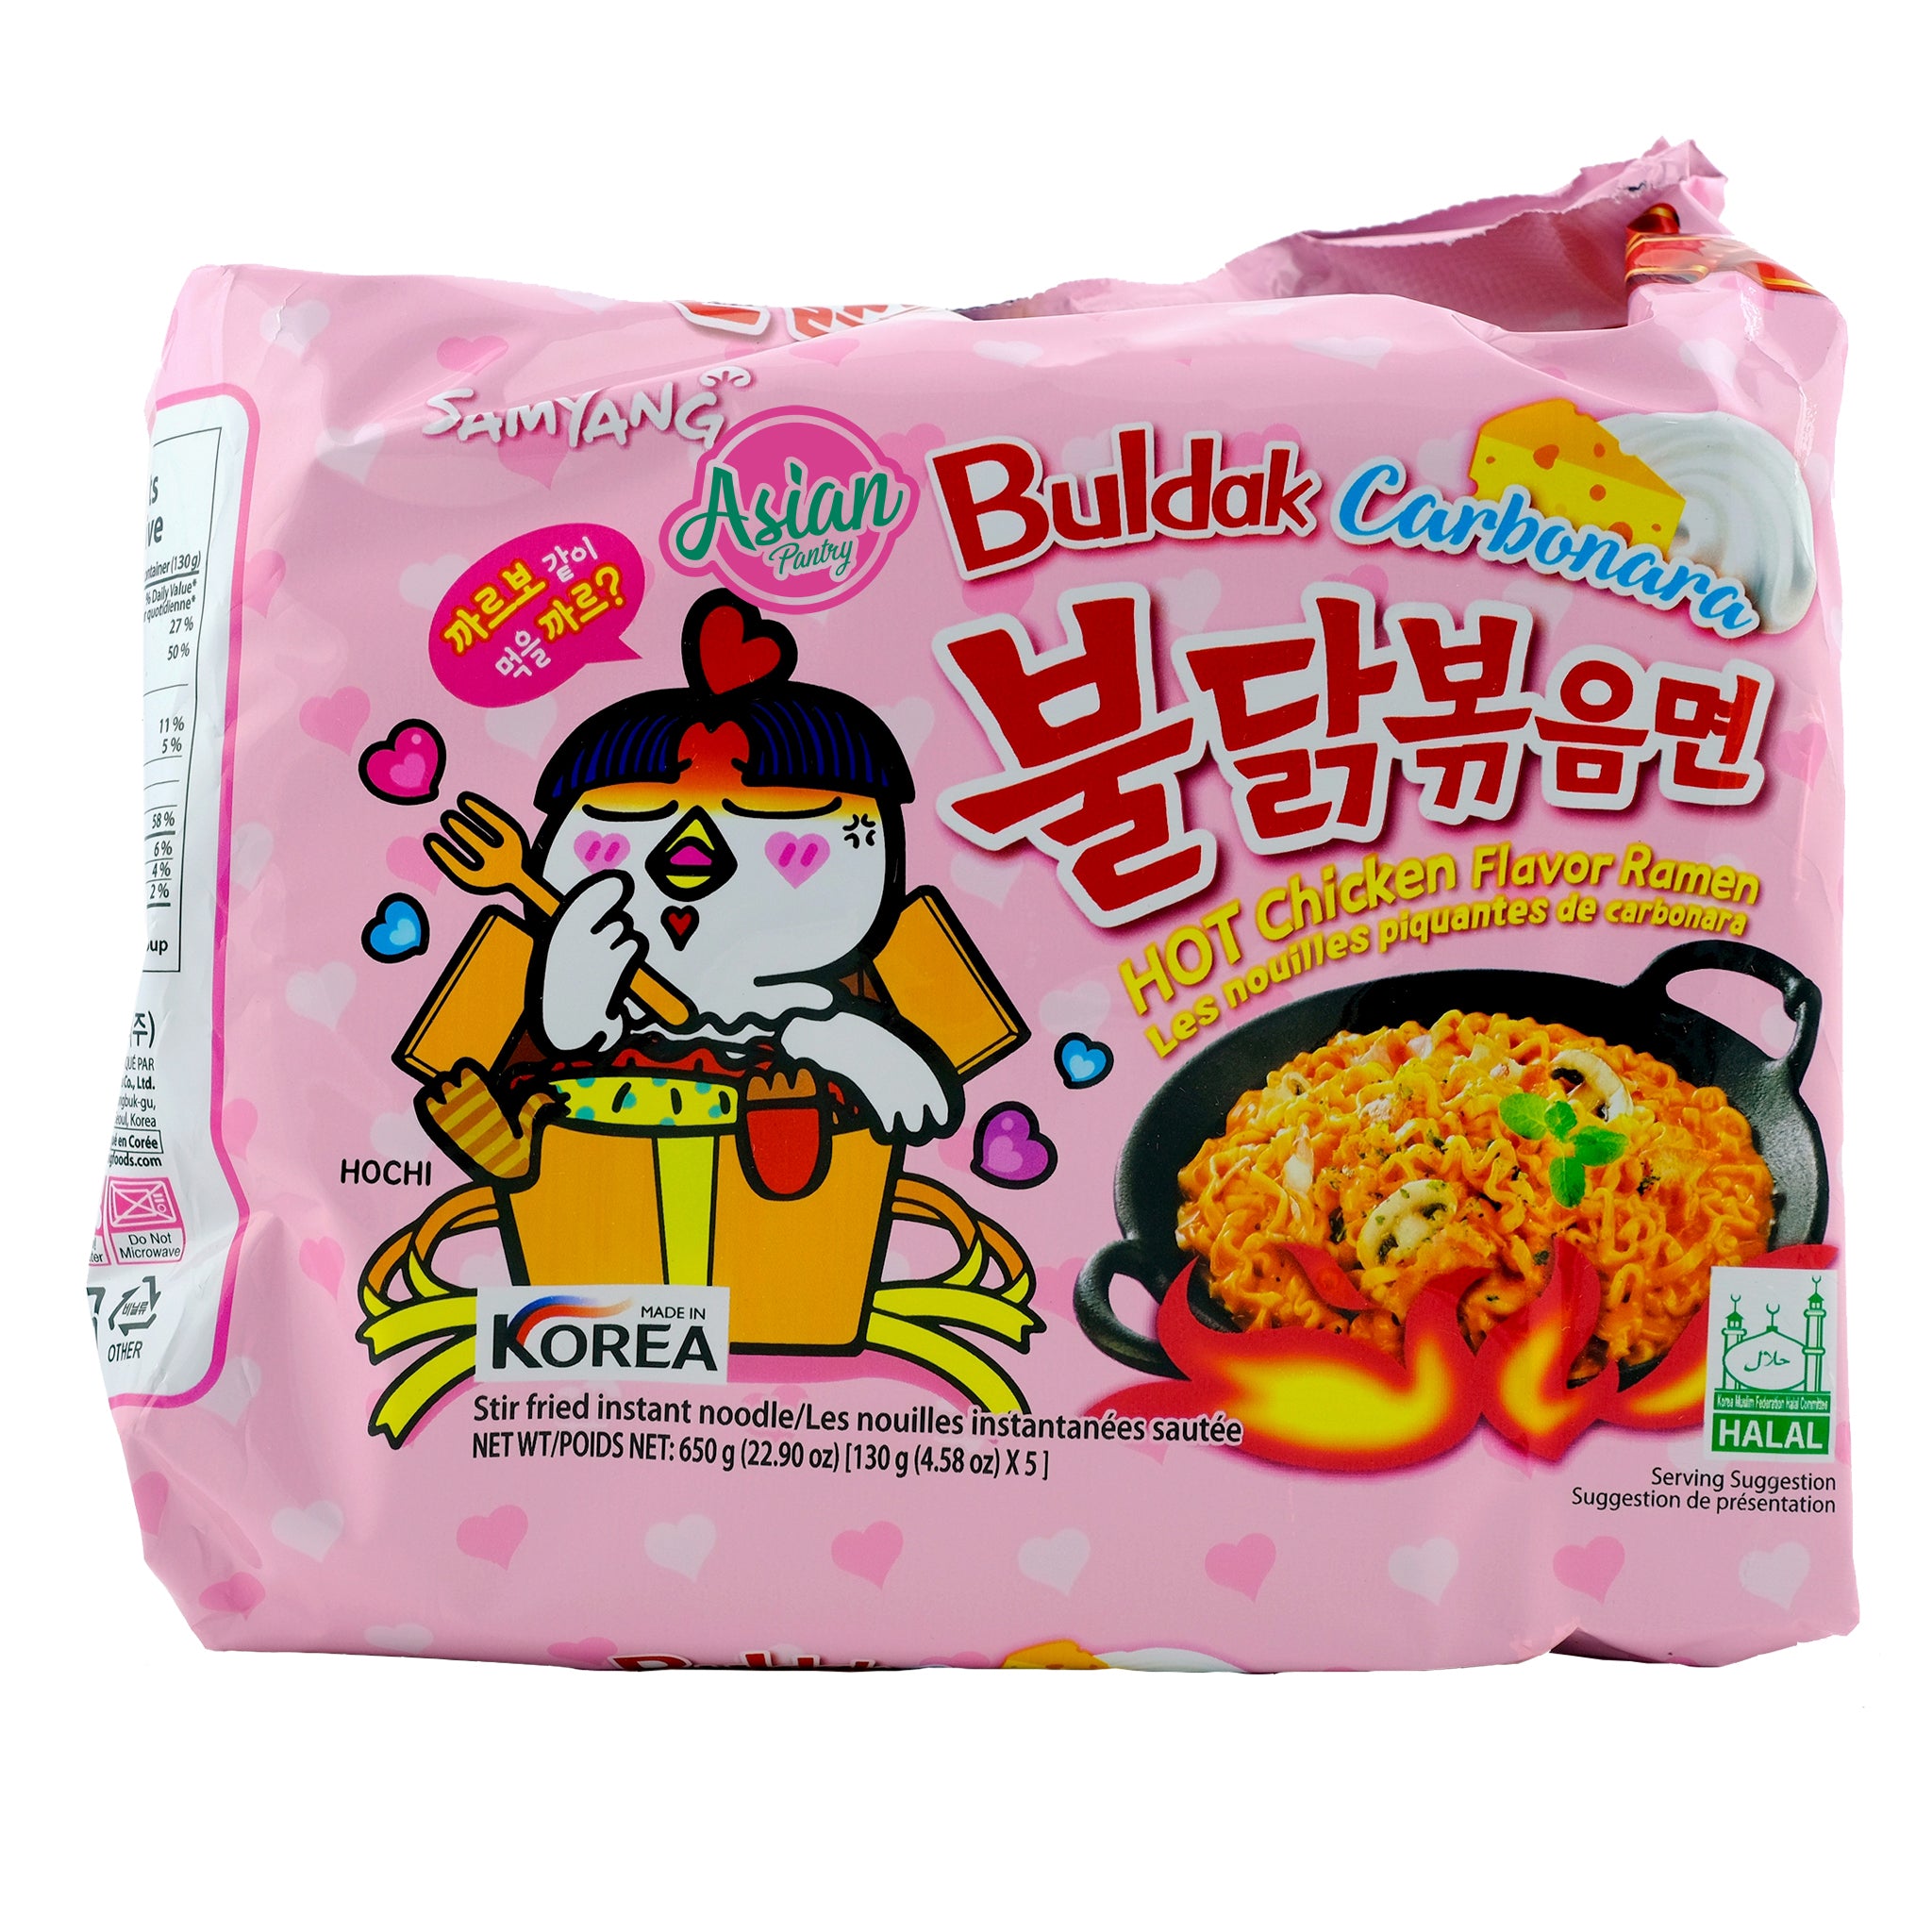 Samyang Buldak Carbonara - Hot Chicken Flavour Ramen